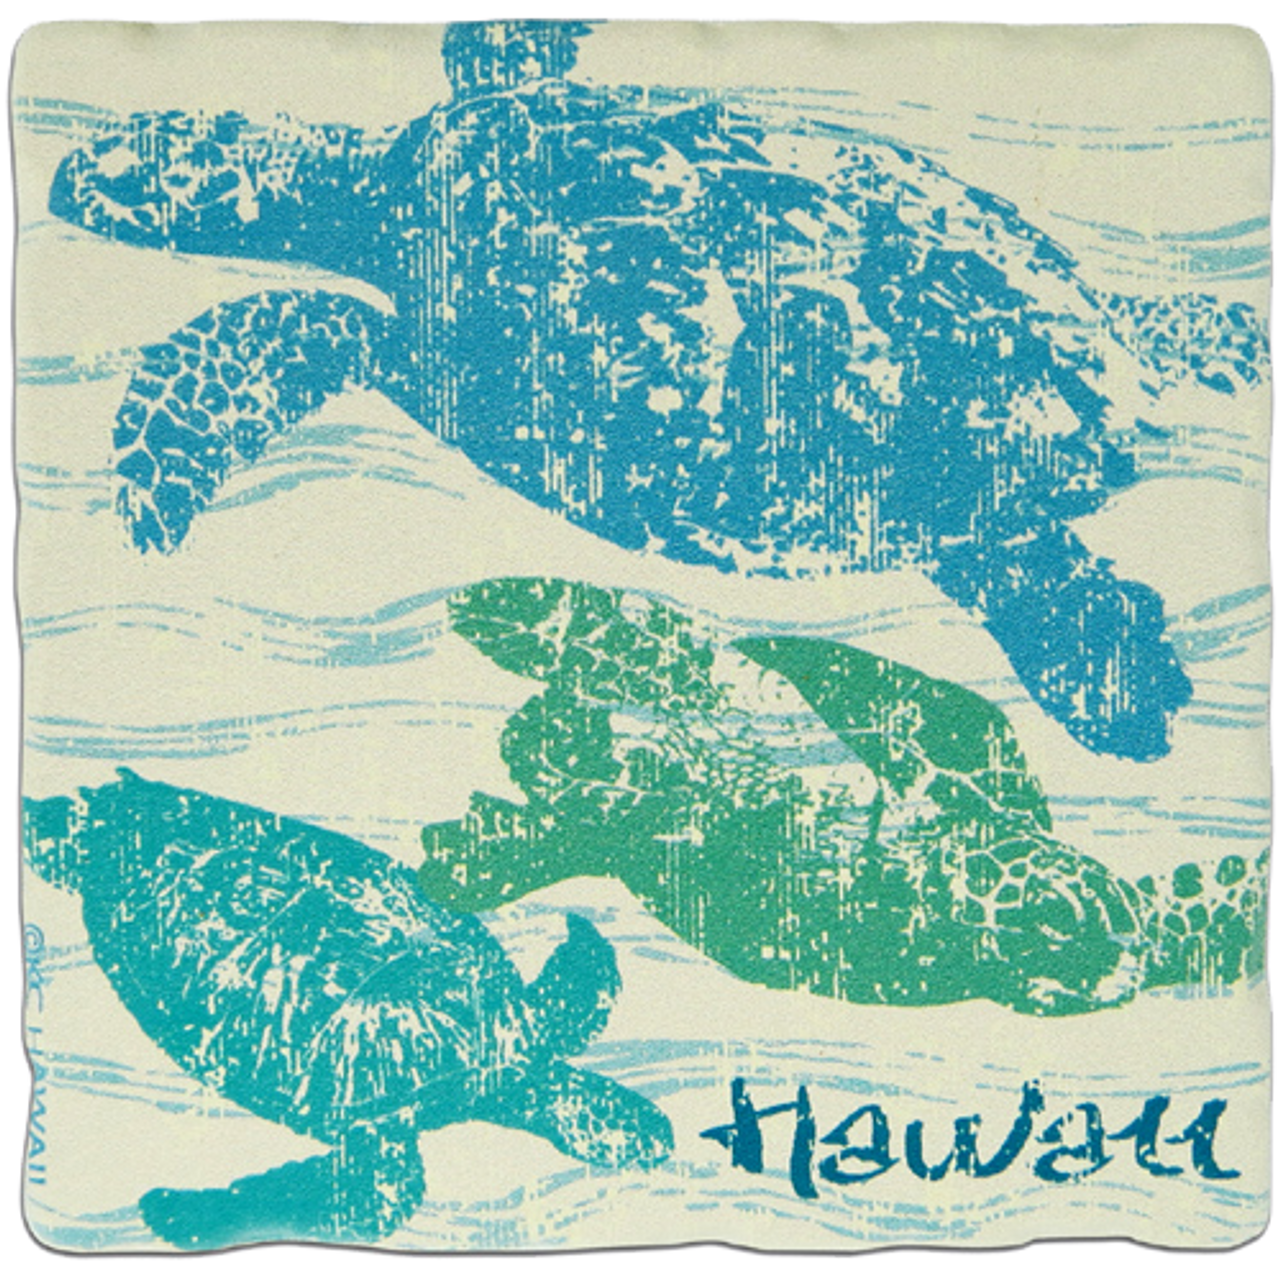 University of Hawaii Car Cup Holder Coaster (Set of 2)University of Hawaii  # 10 / Sandstone